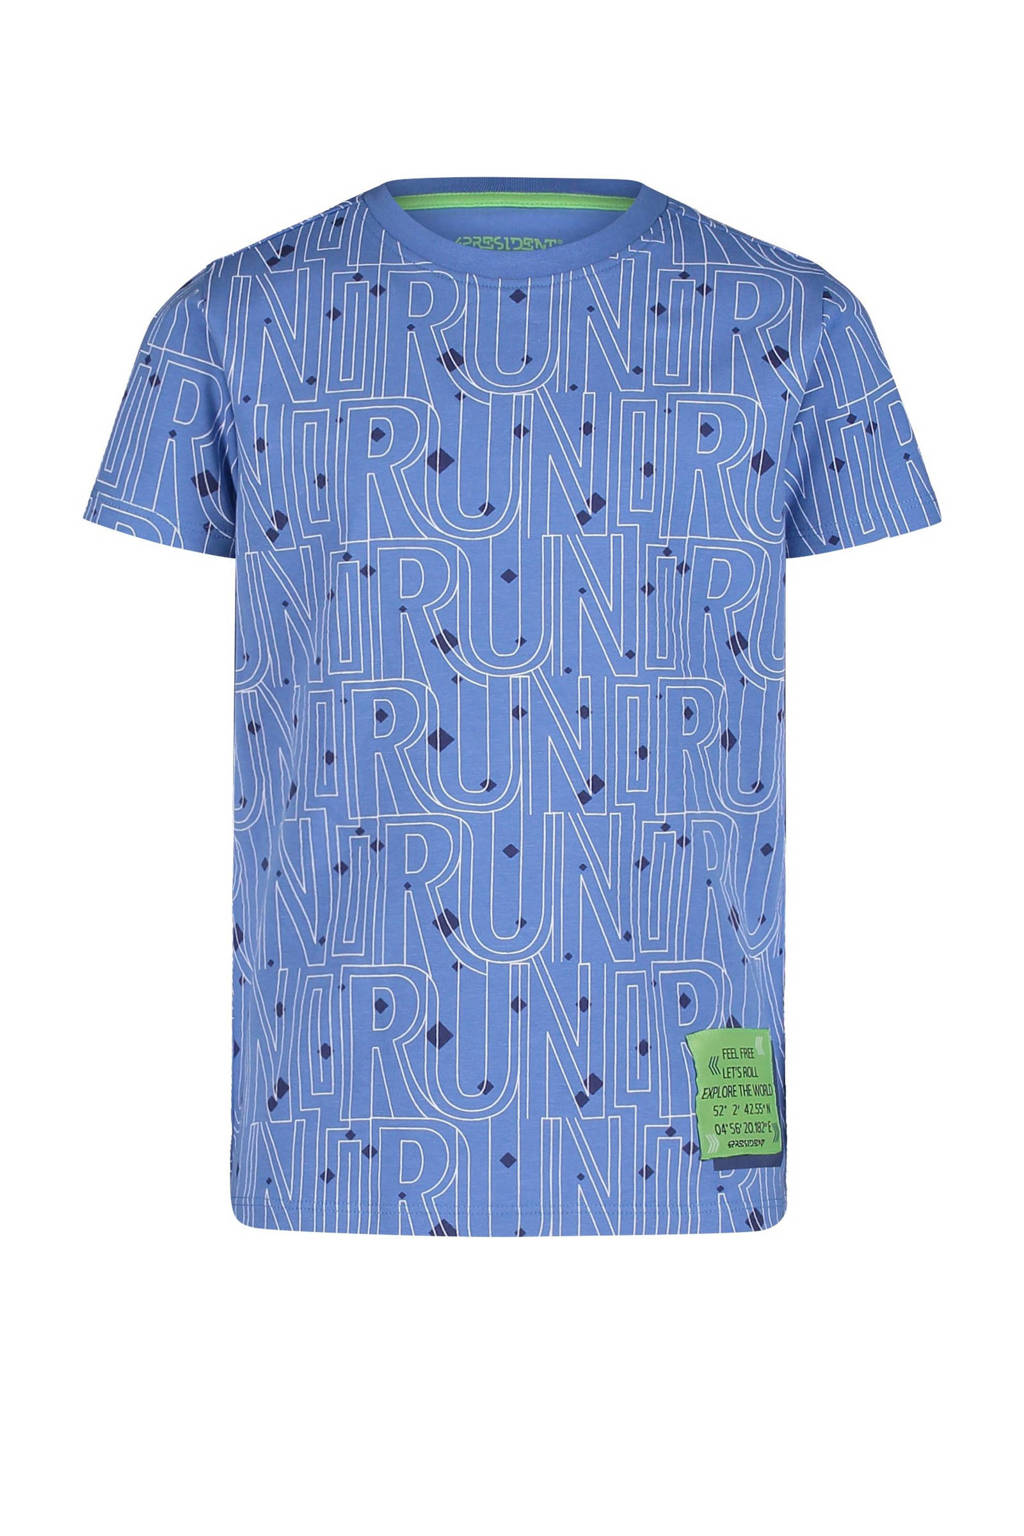 4PRESIDENT T-shirt Dex met all over print blauw